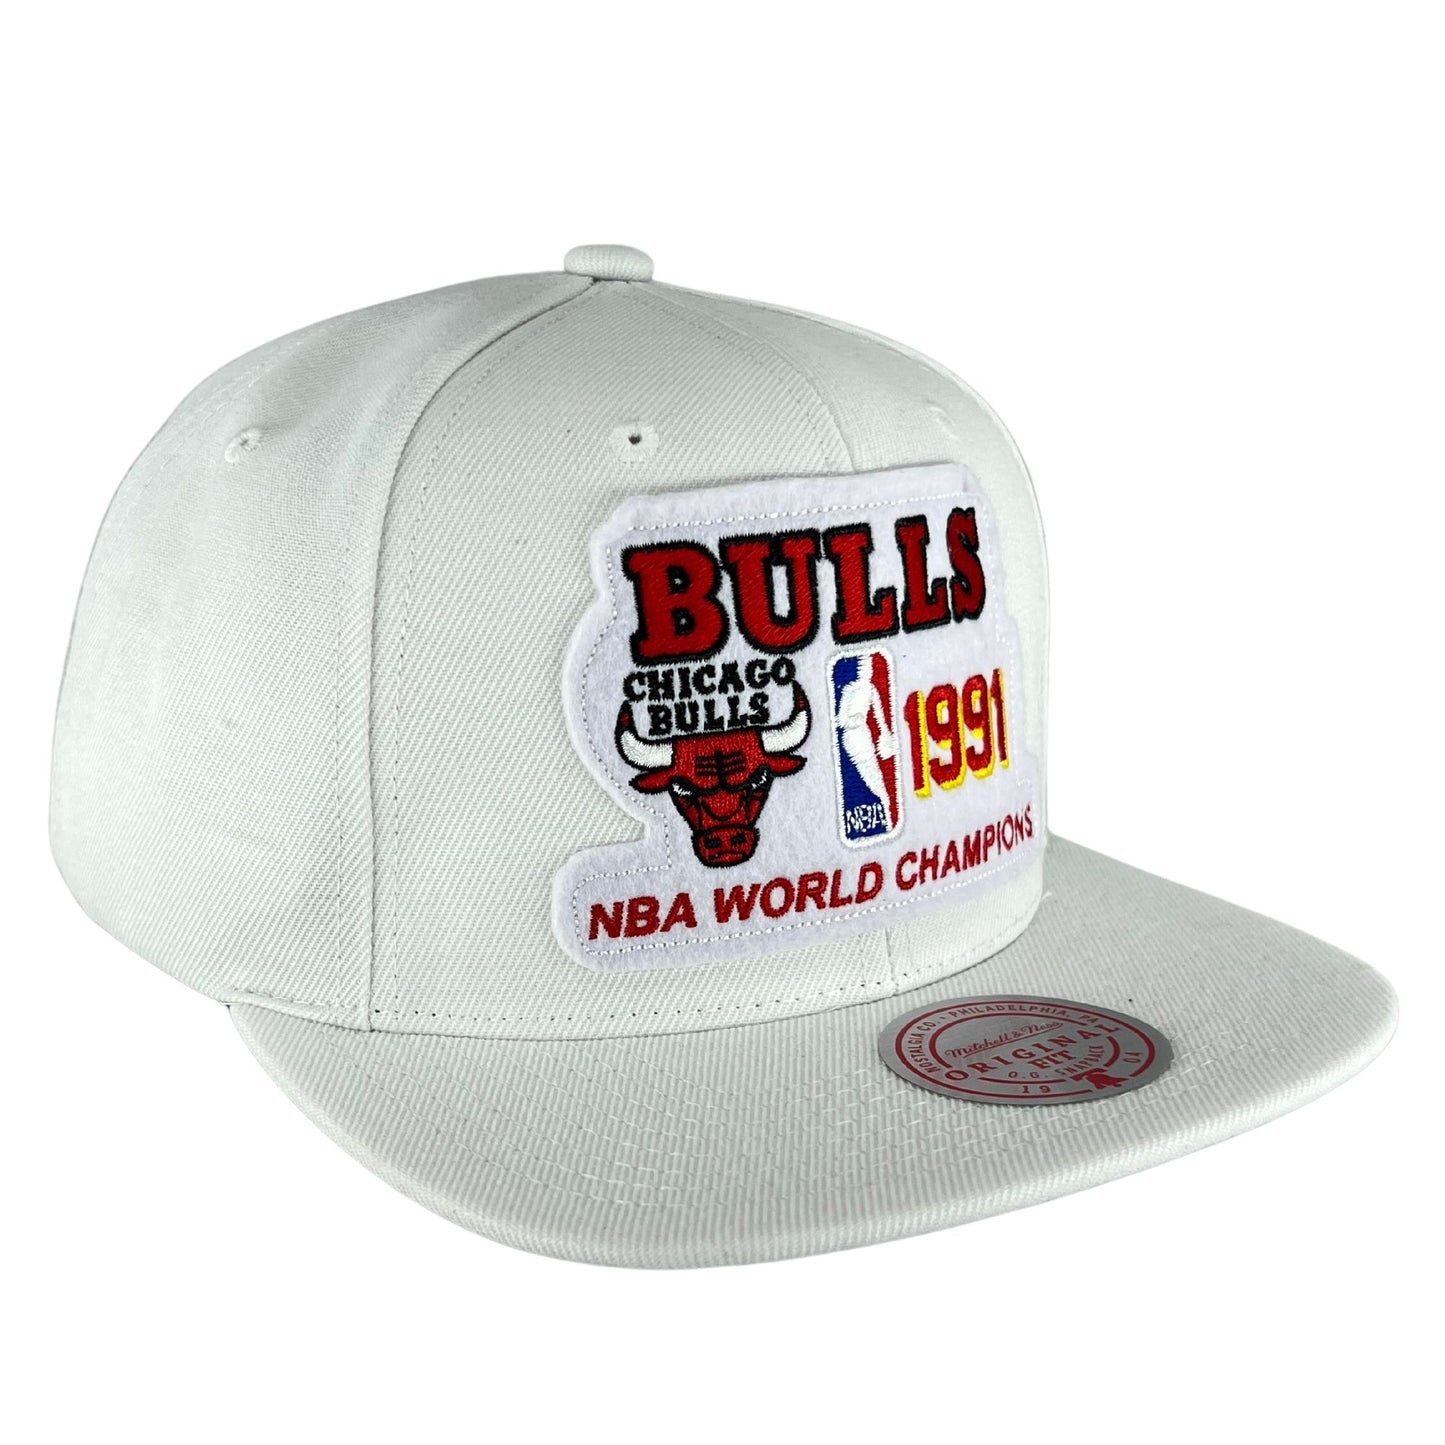 Chicago Bulls 1991 NBA Champions All White Snapback Hat